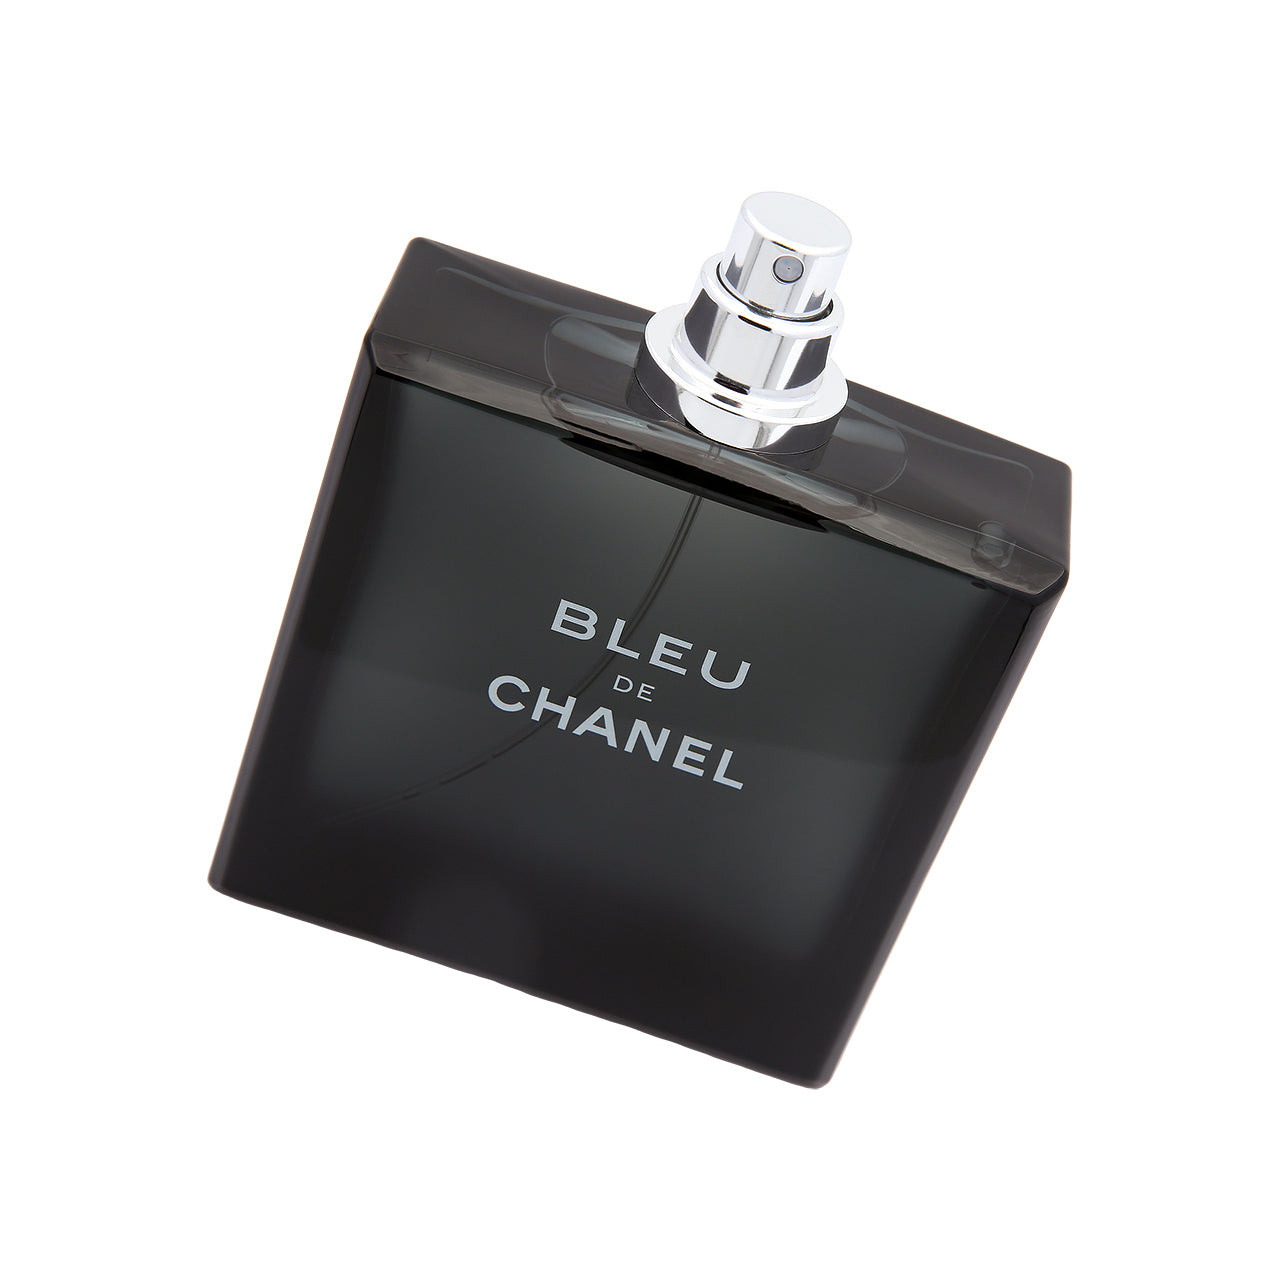 Chanel BLEU DE CHANEL Eau De Toilette Spray 100ml | Sasa Global eShop